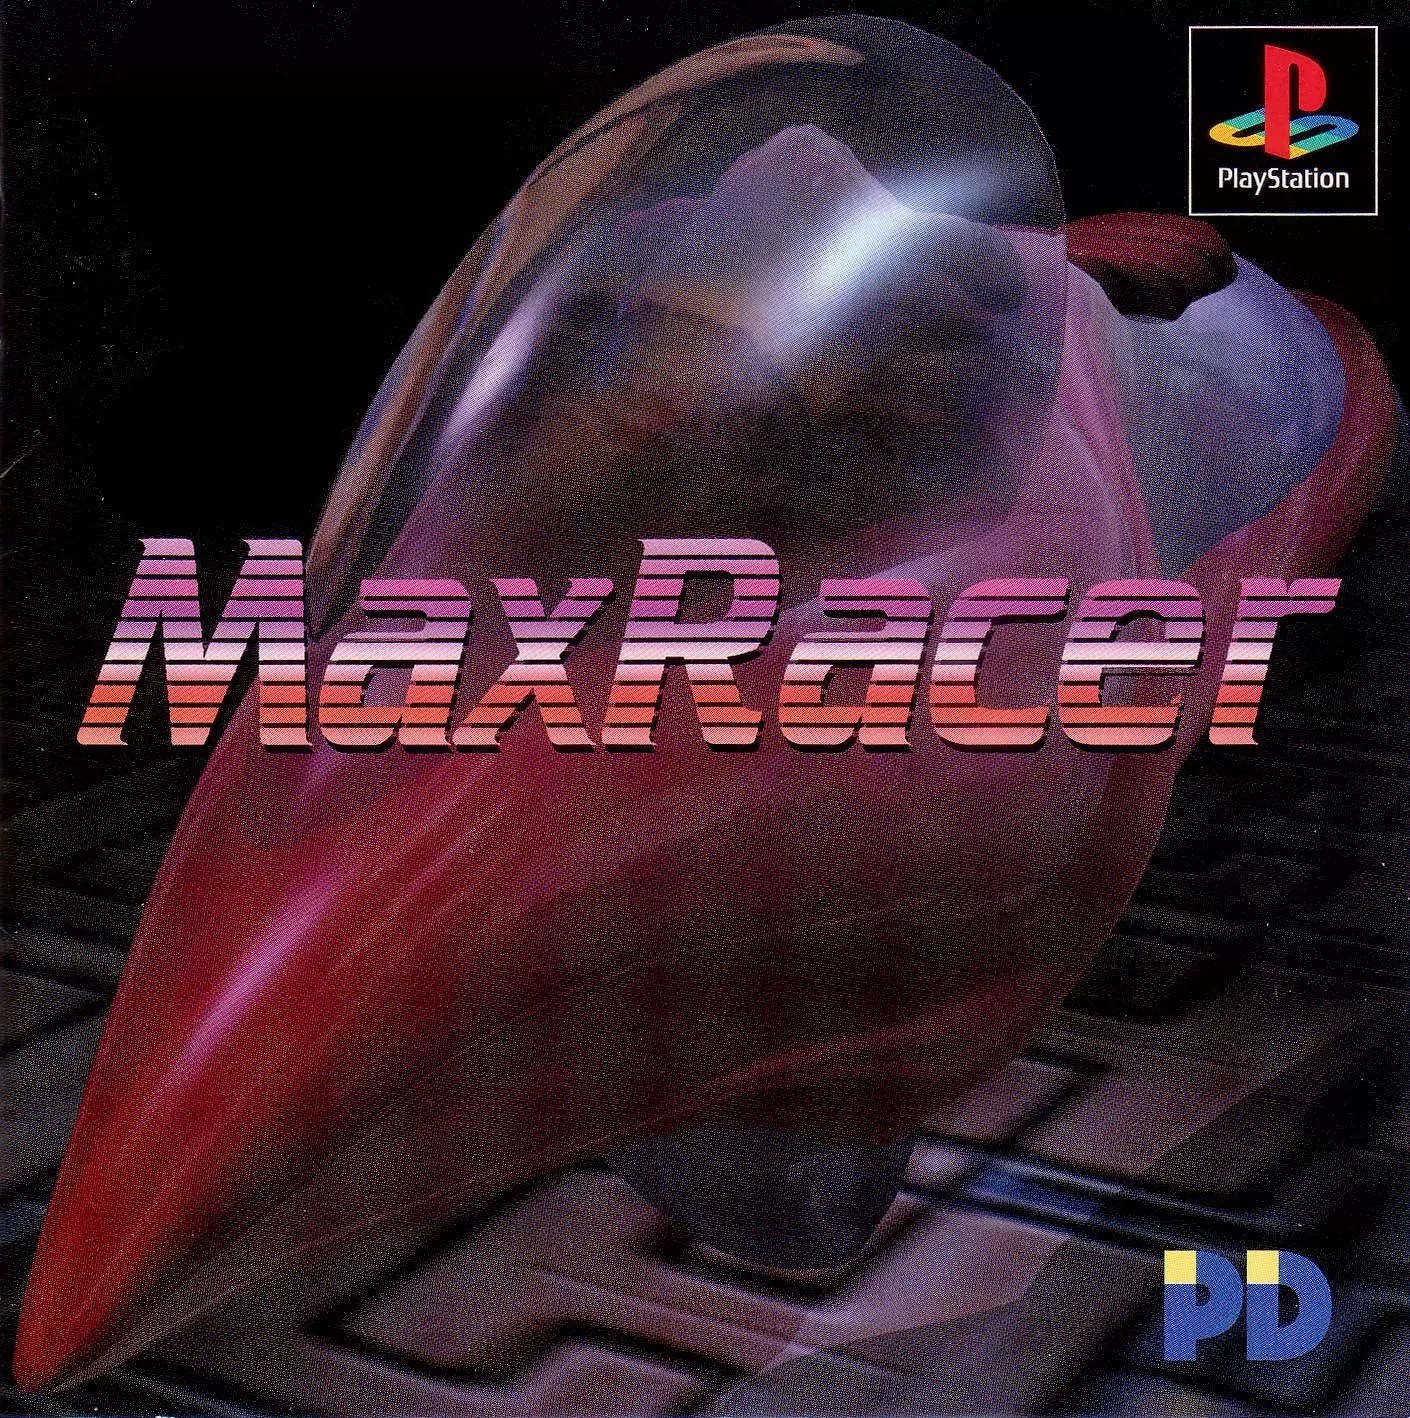 Playstation games - MaxRacer